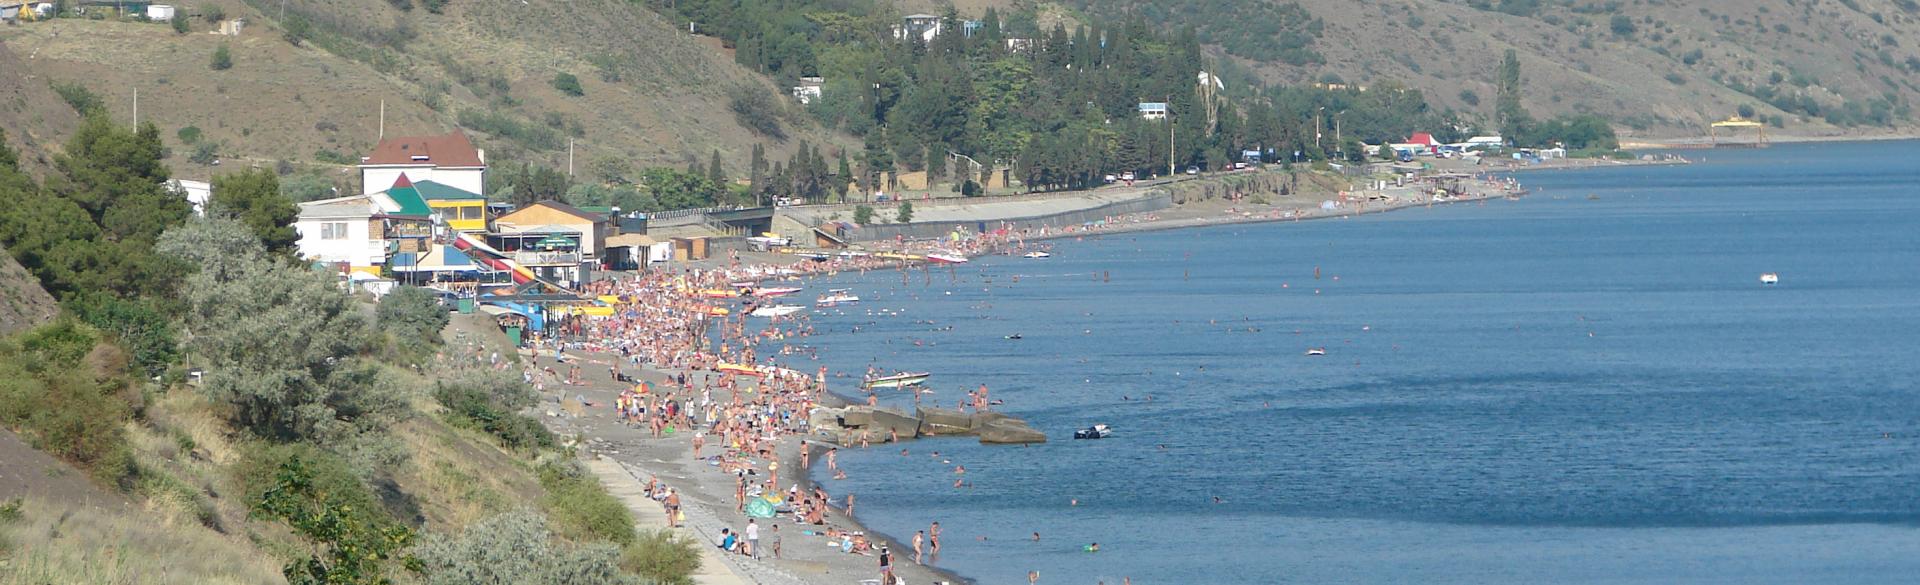 Morskoye - budget holidays in the Crimea